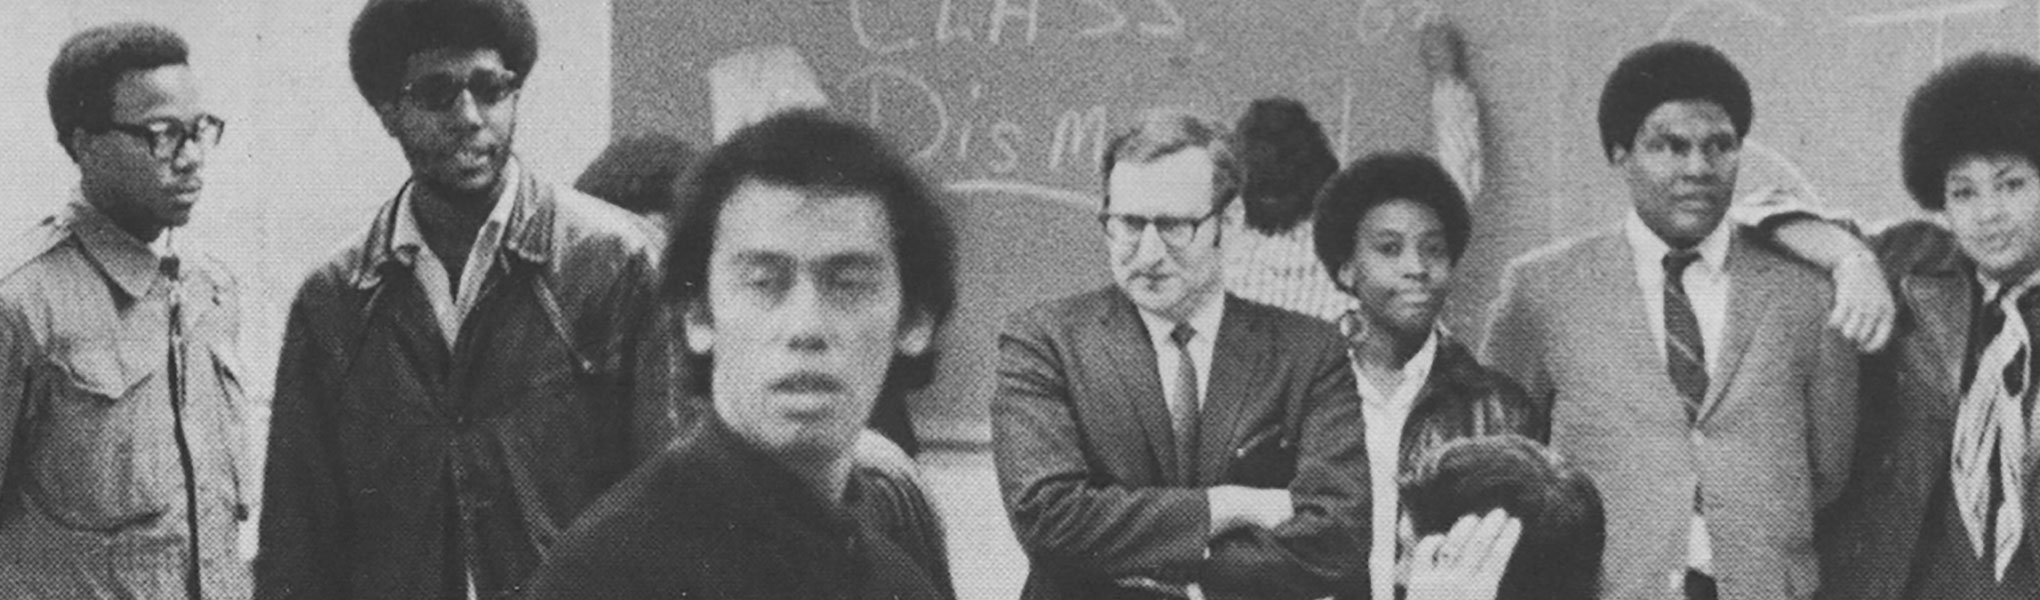 1968 Student Strike Classroom